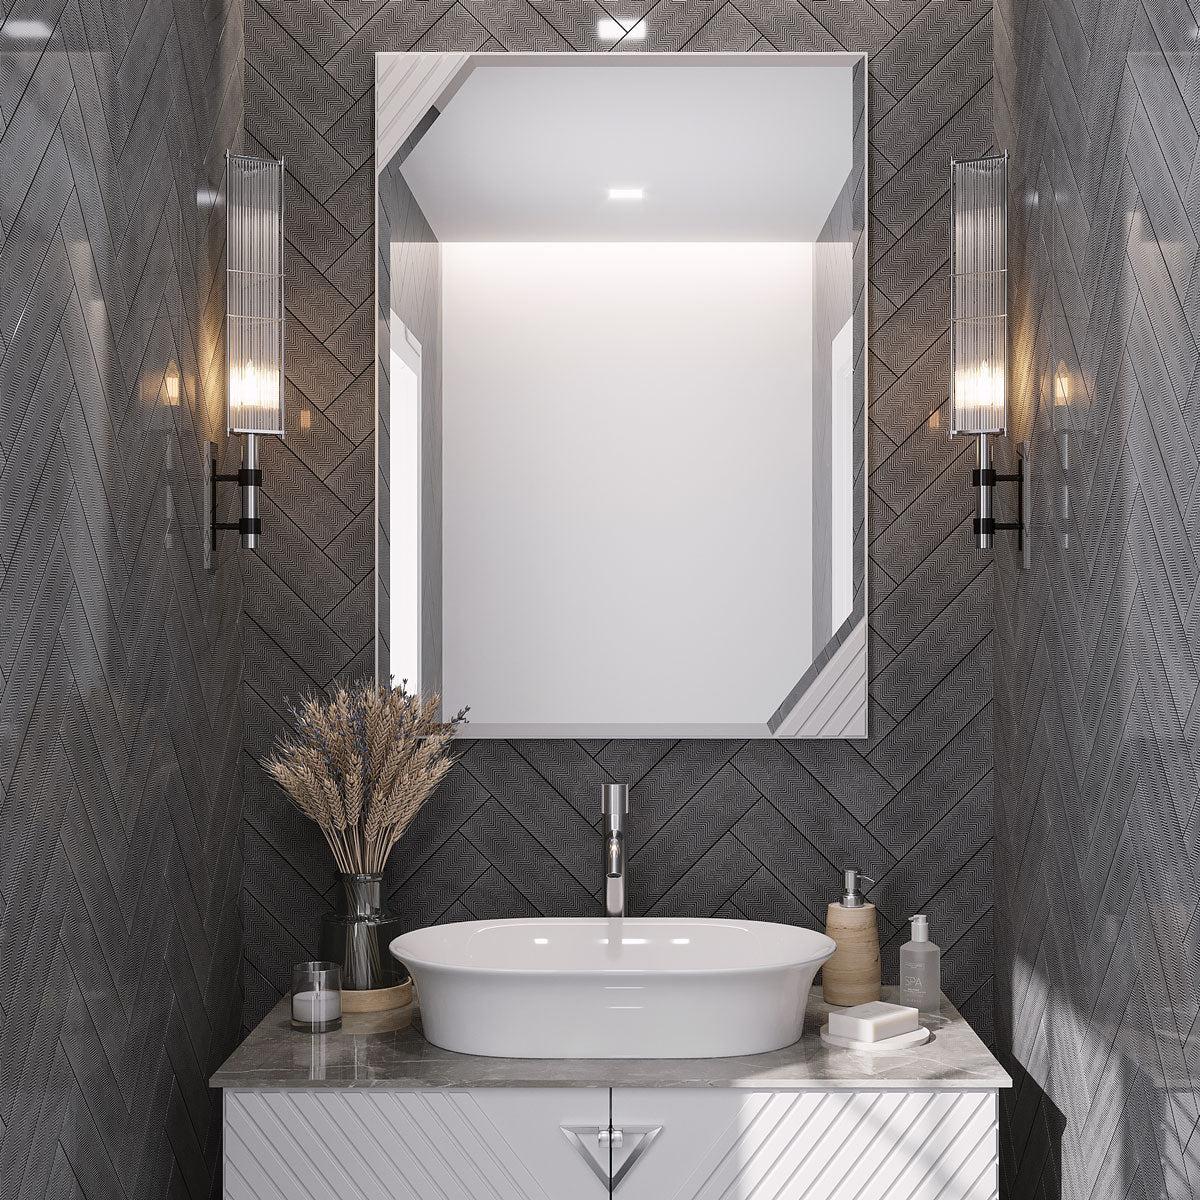 Modern bohemian bathroom with textured black wall tile